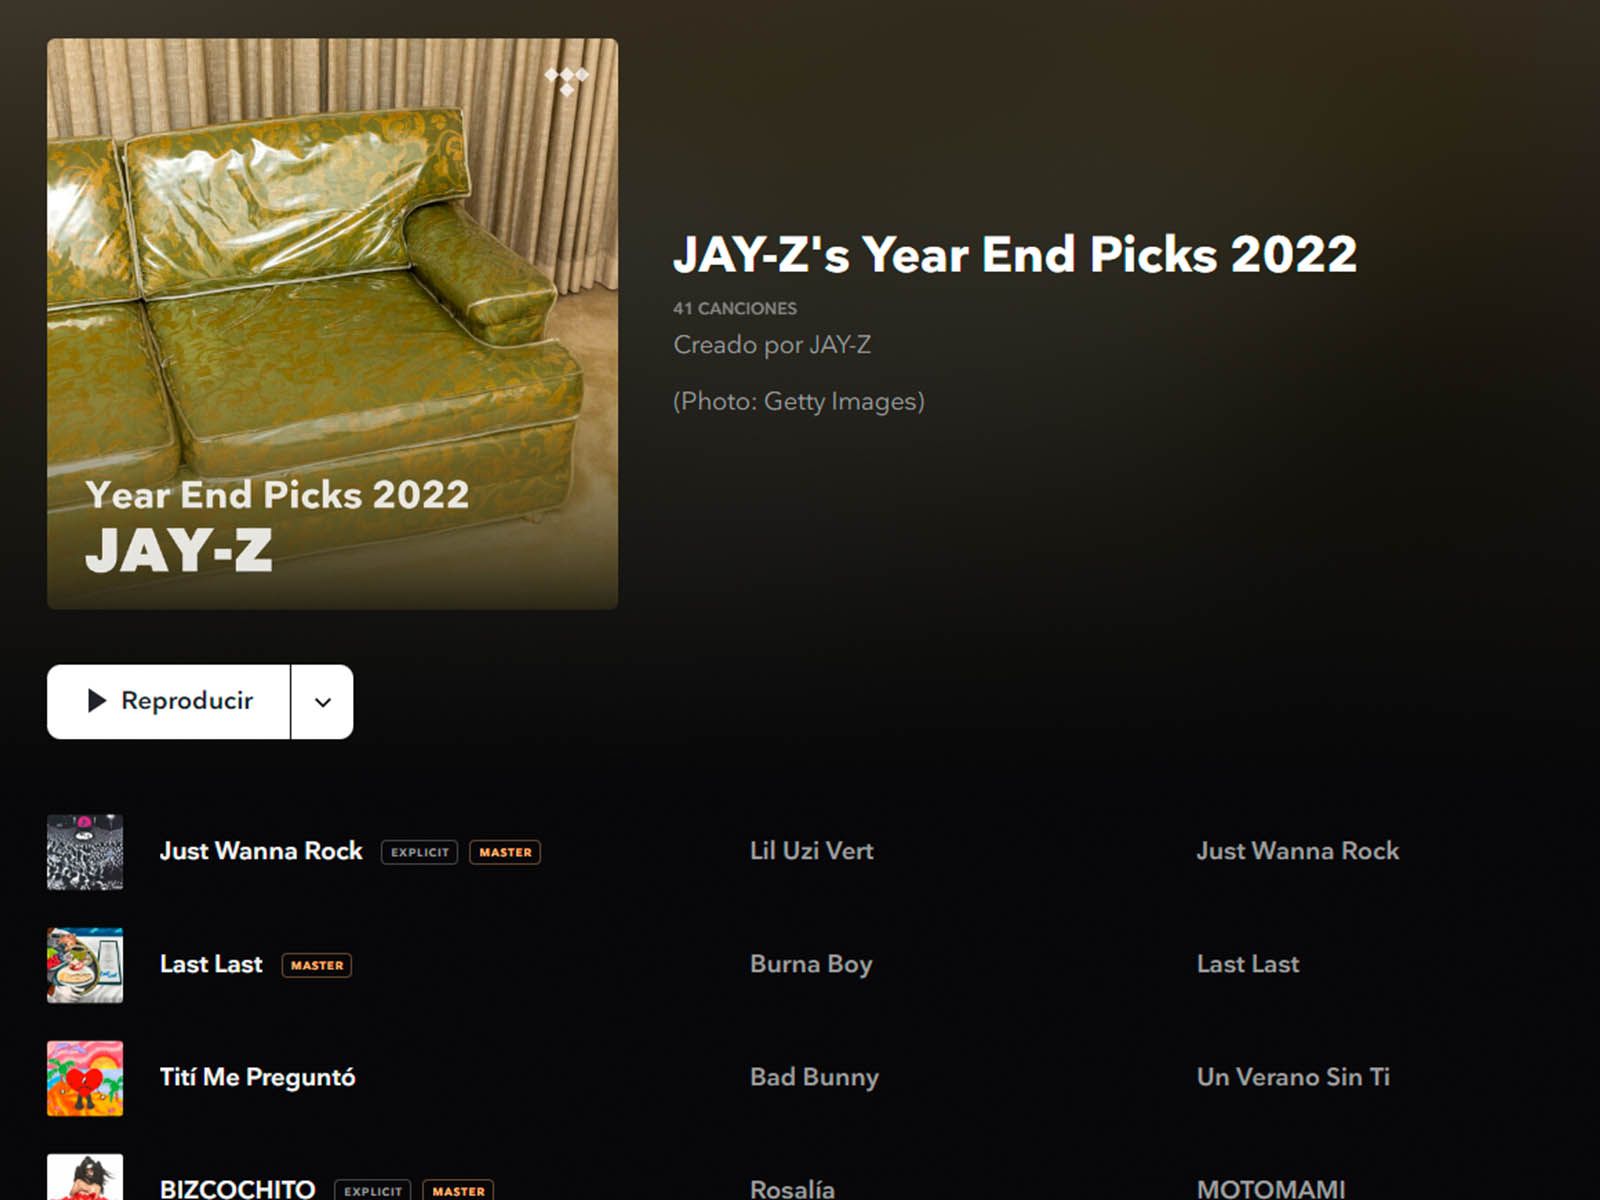 JAY-Z's Year End Picks 2022 on TIDAL